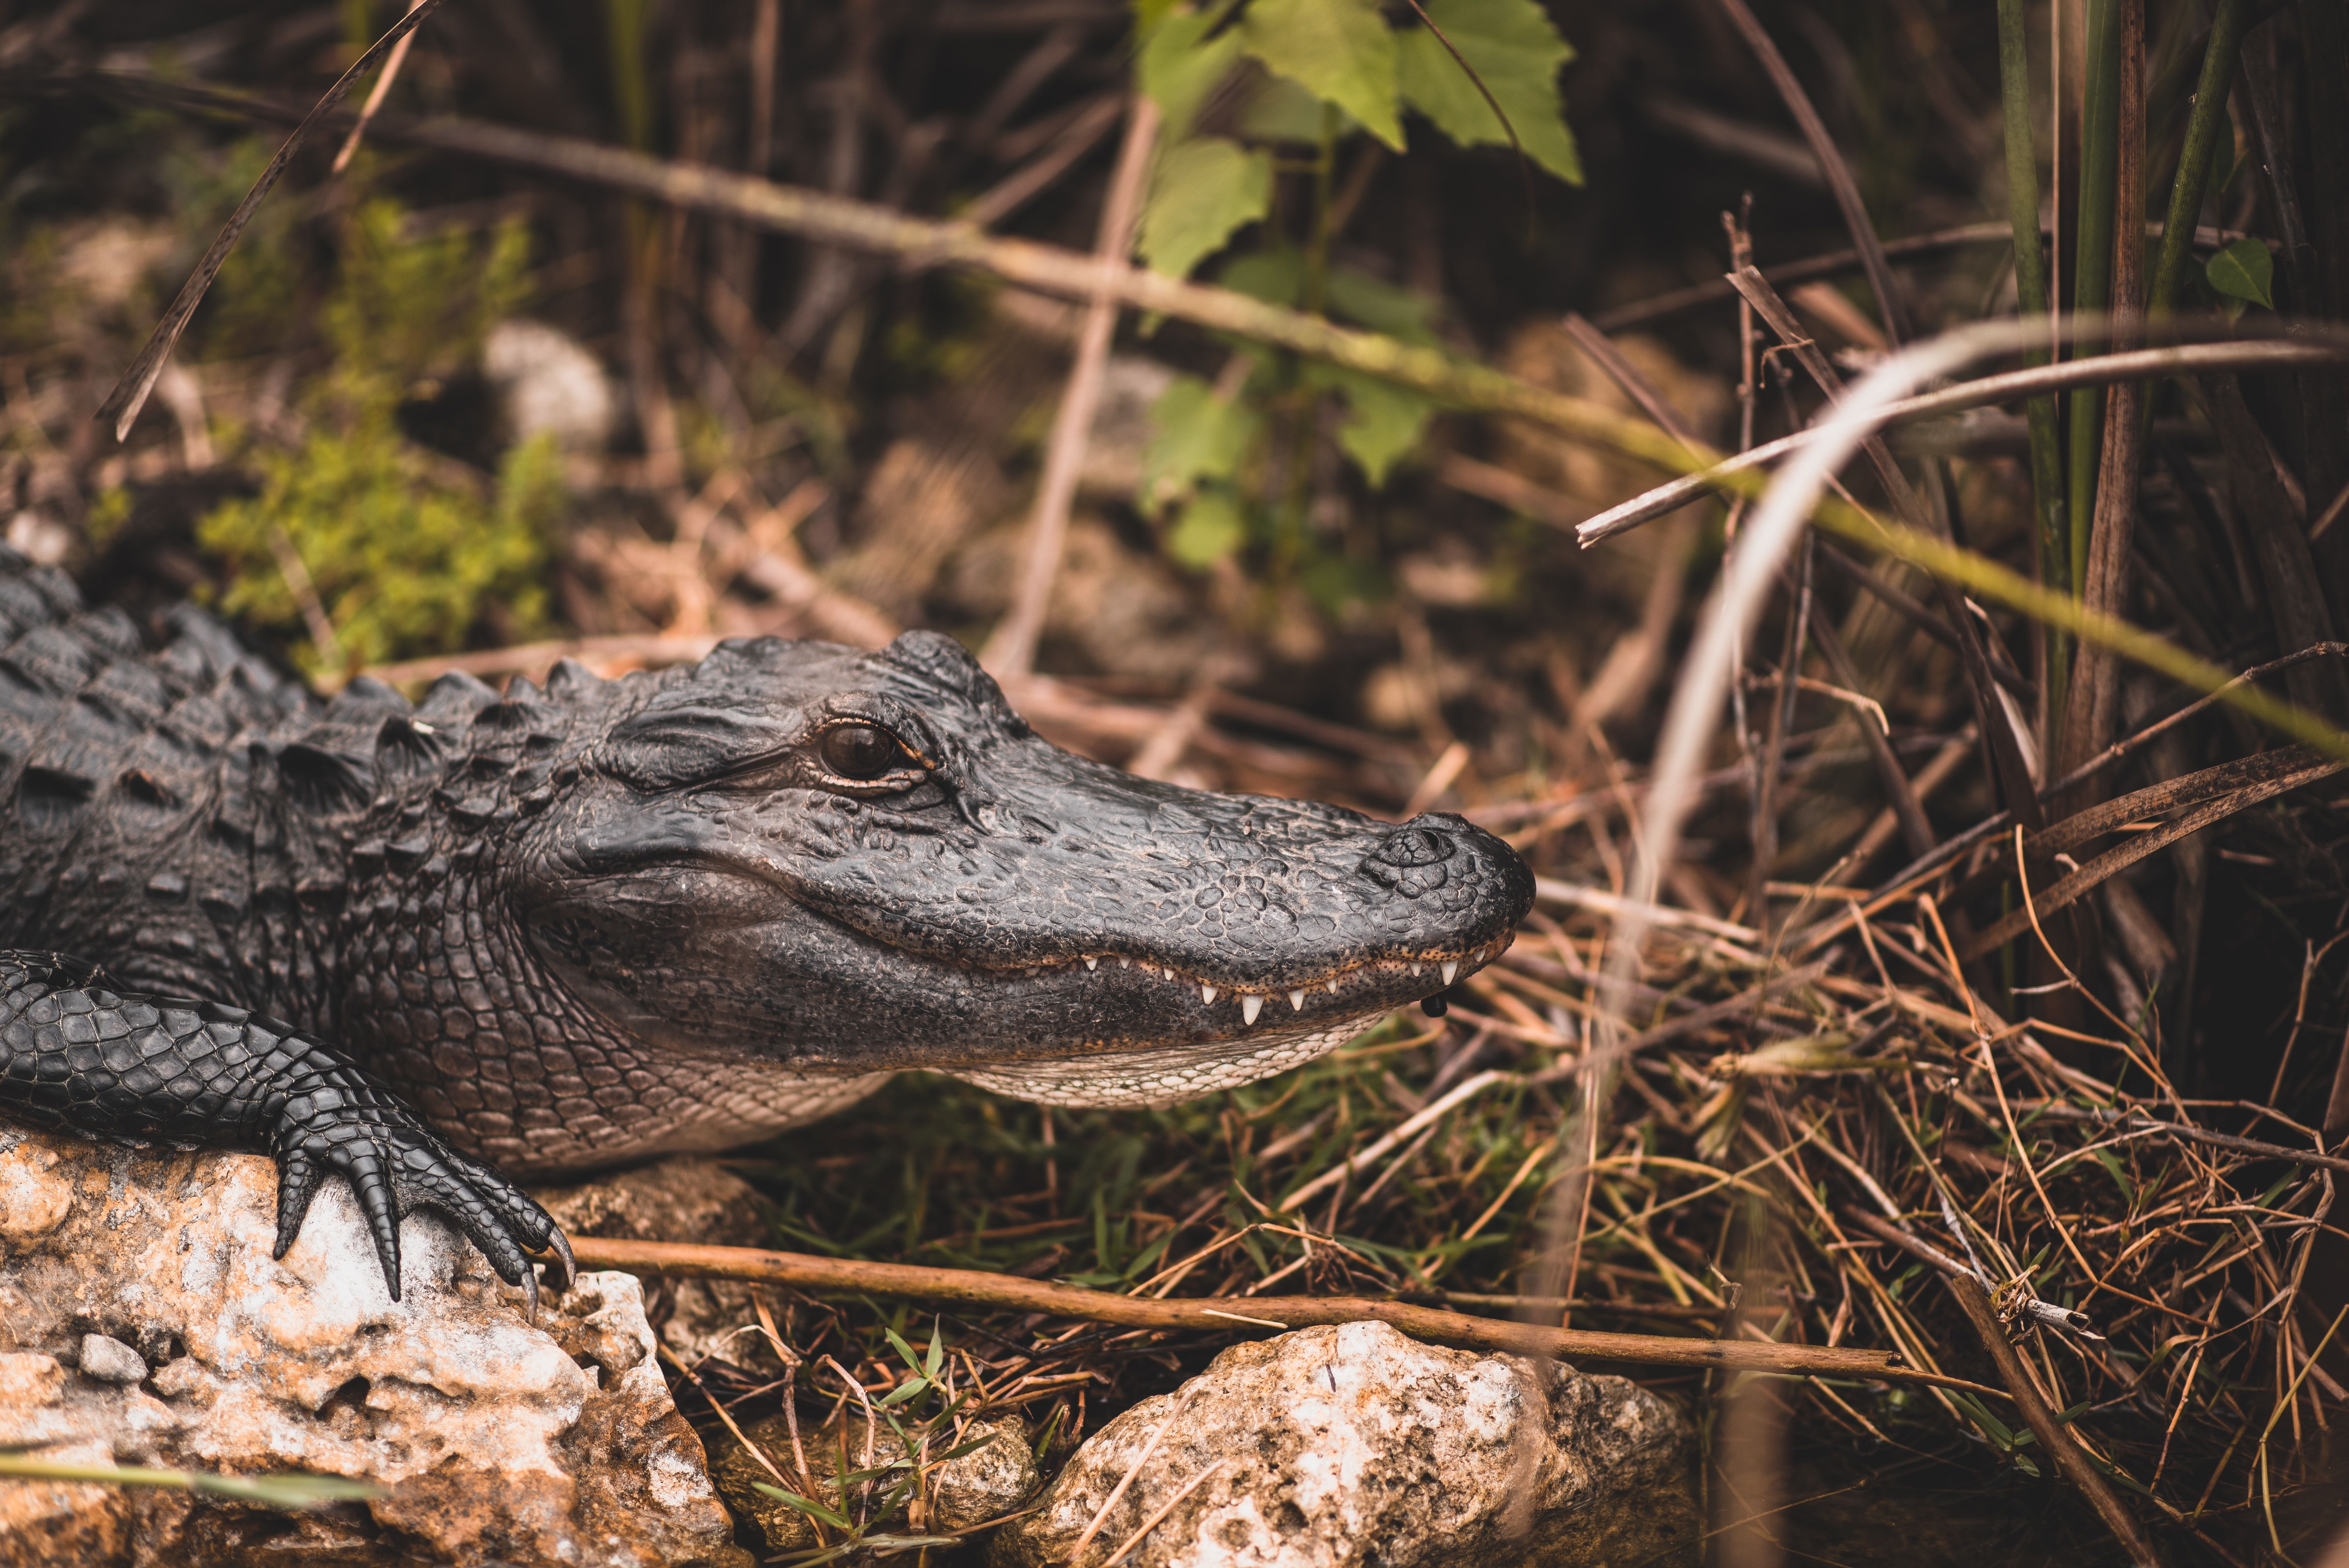 An alligator at Everglades National Park